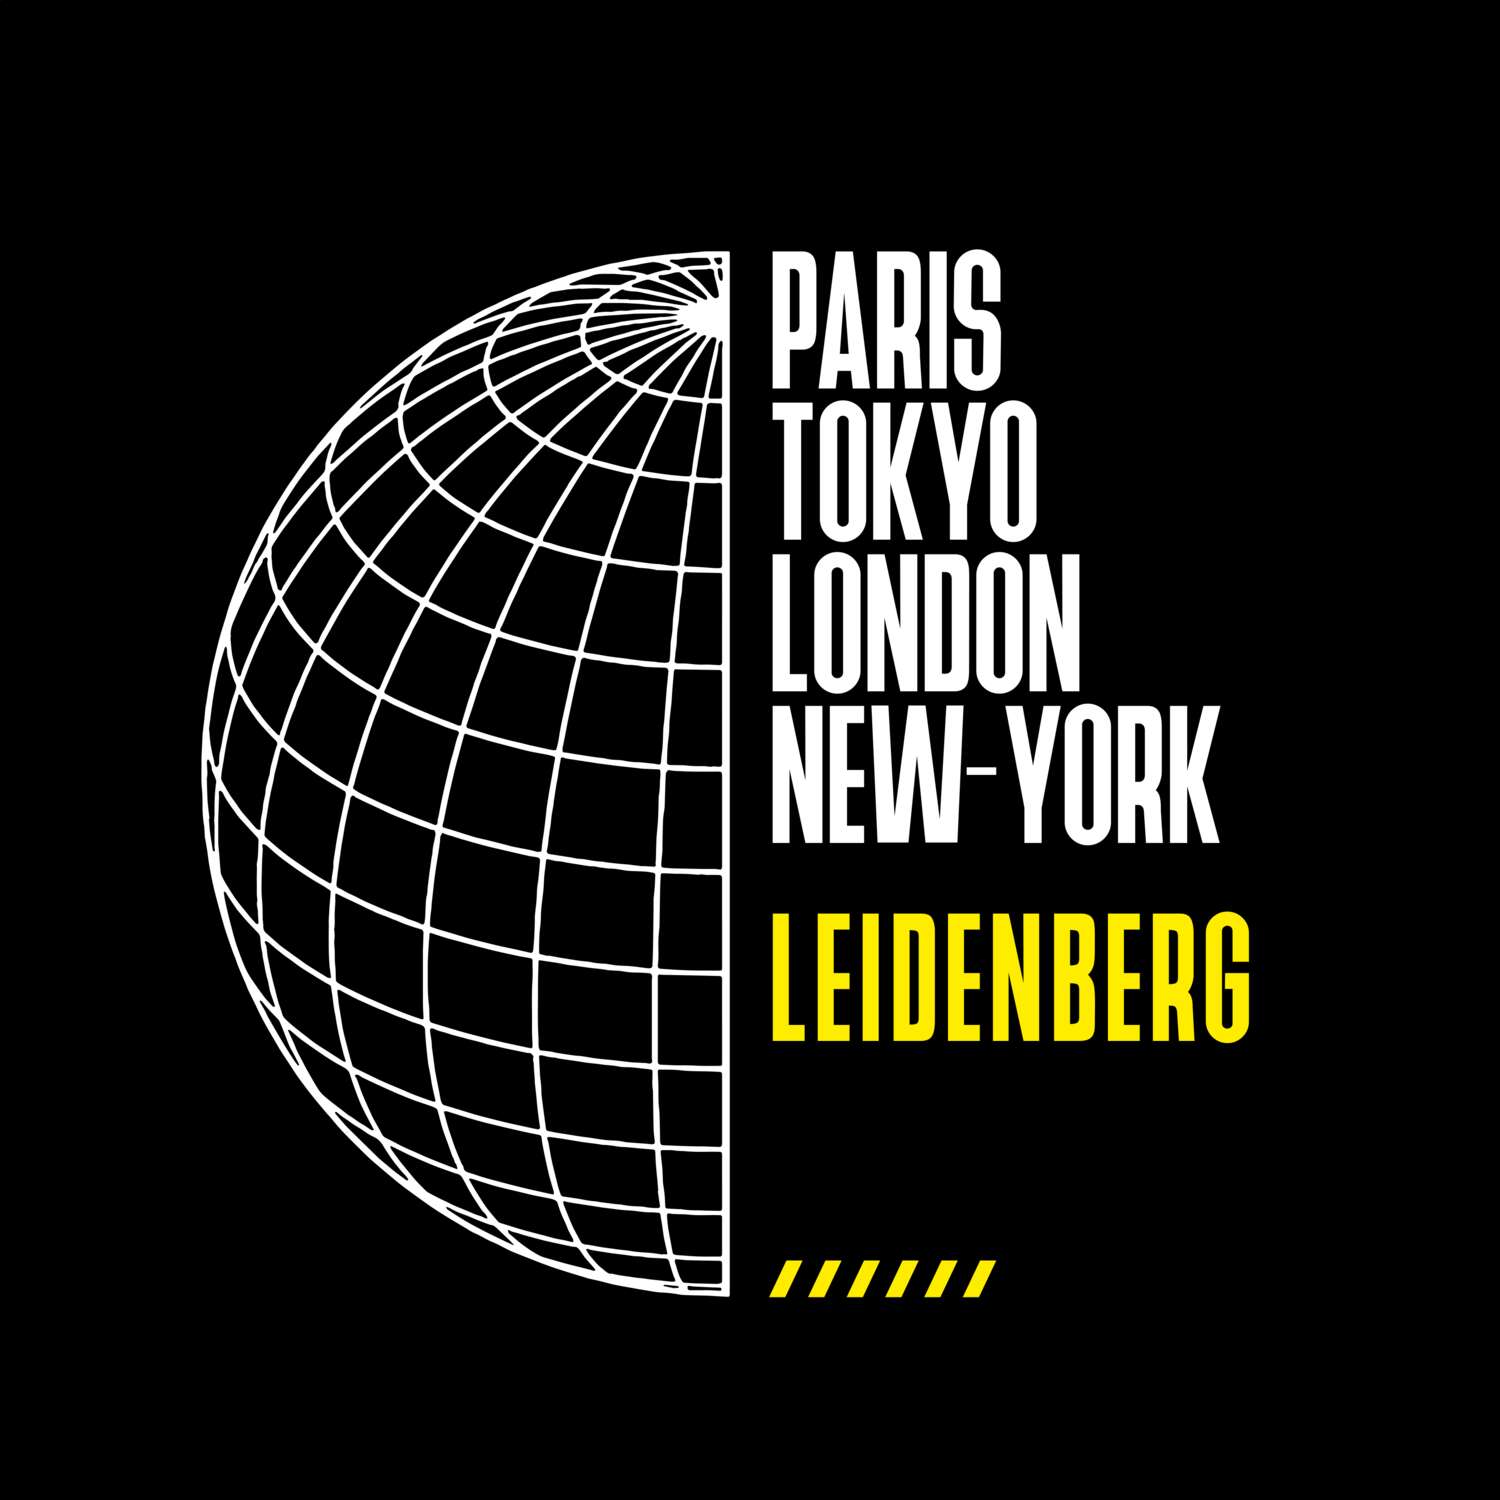 Leidenberg T-Shirt »Paris Tokyo London«